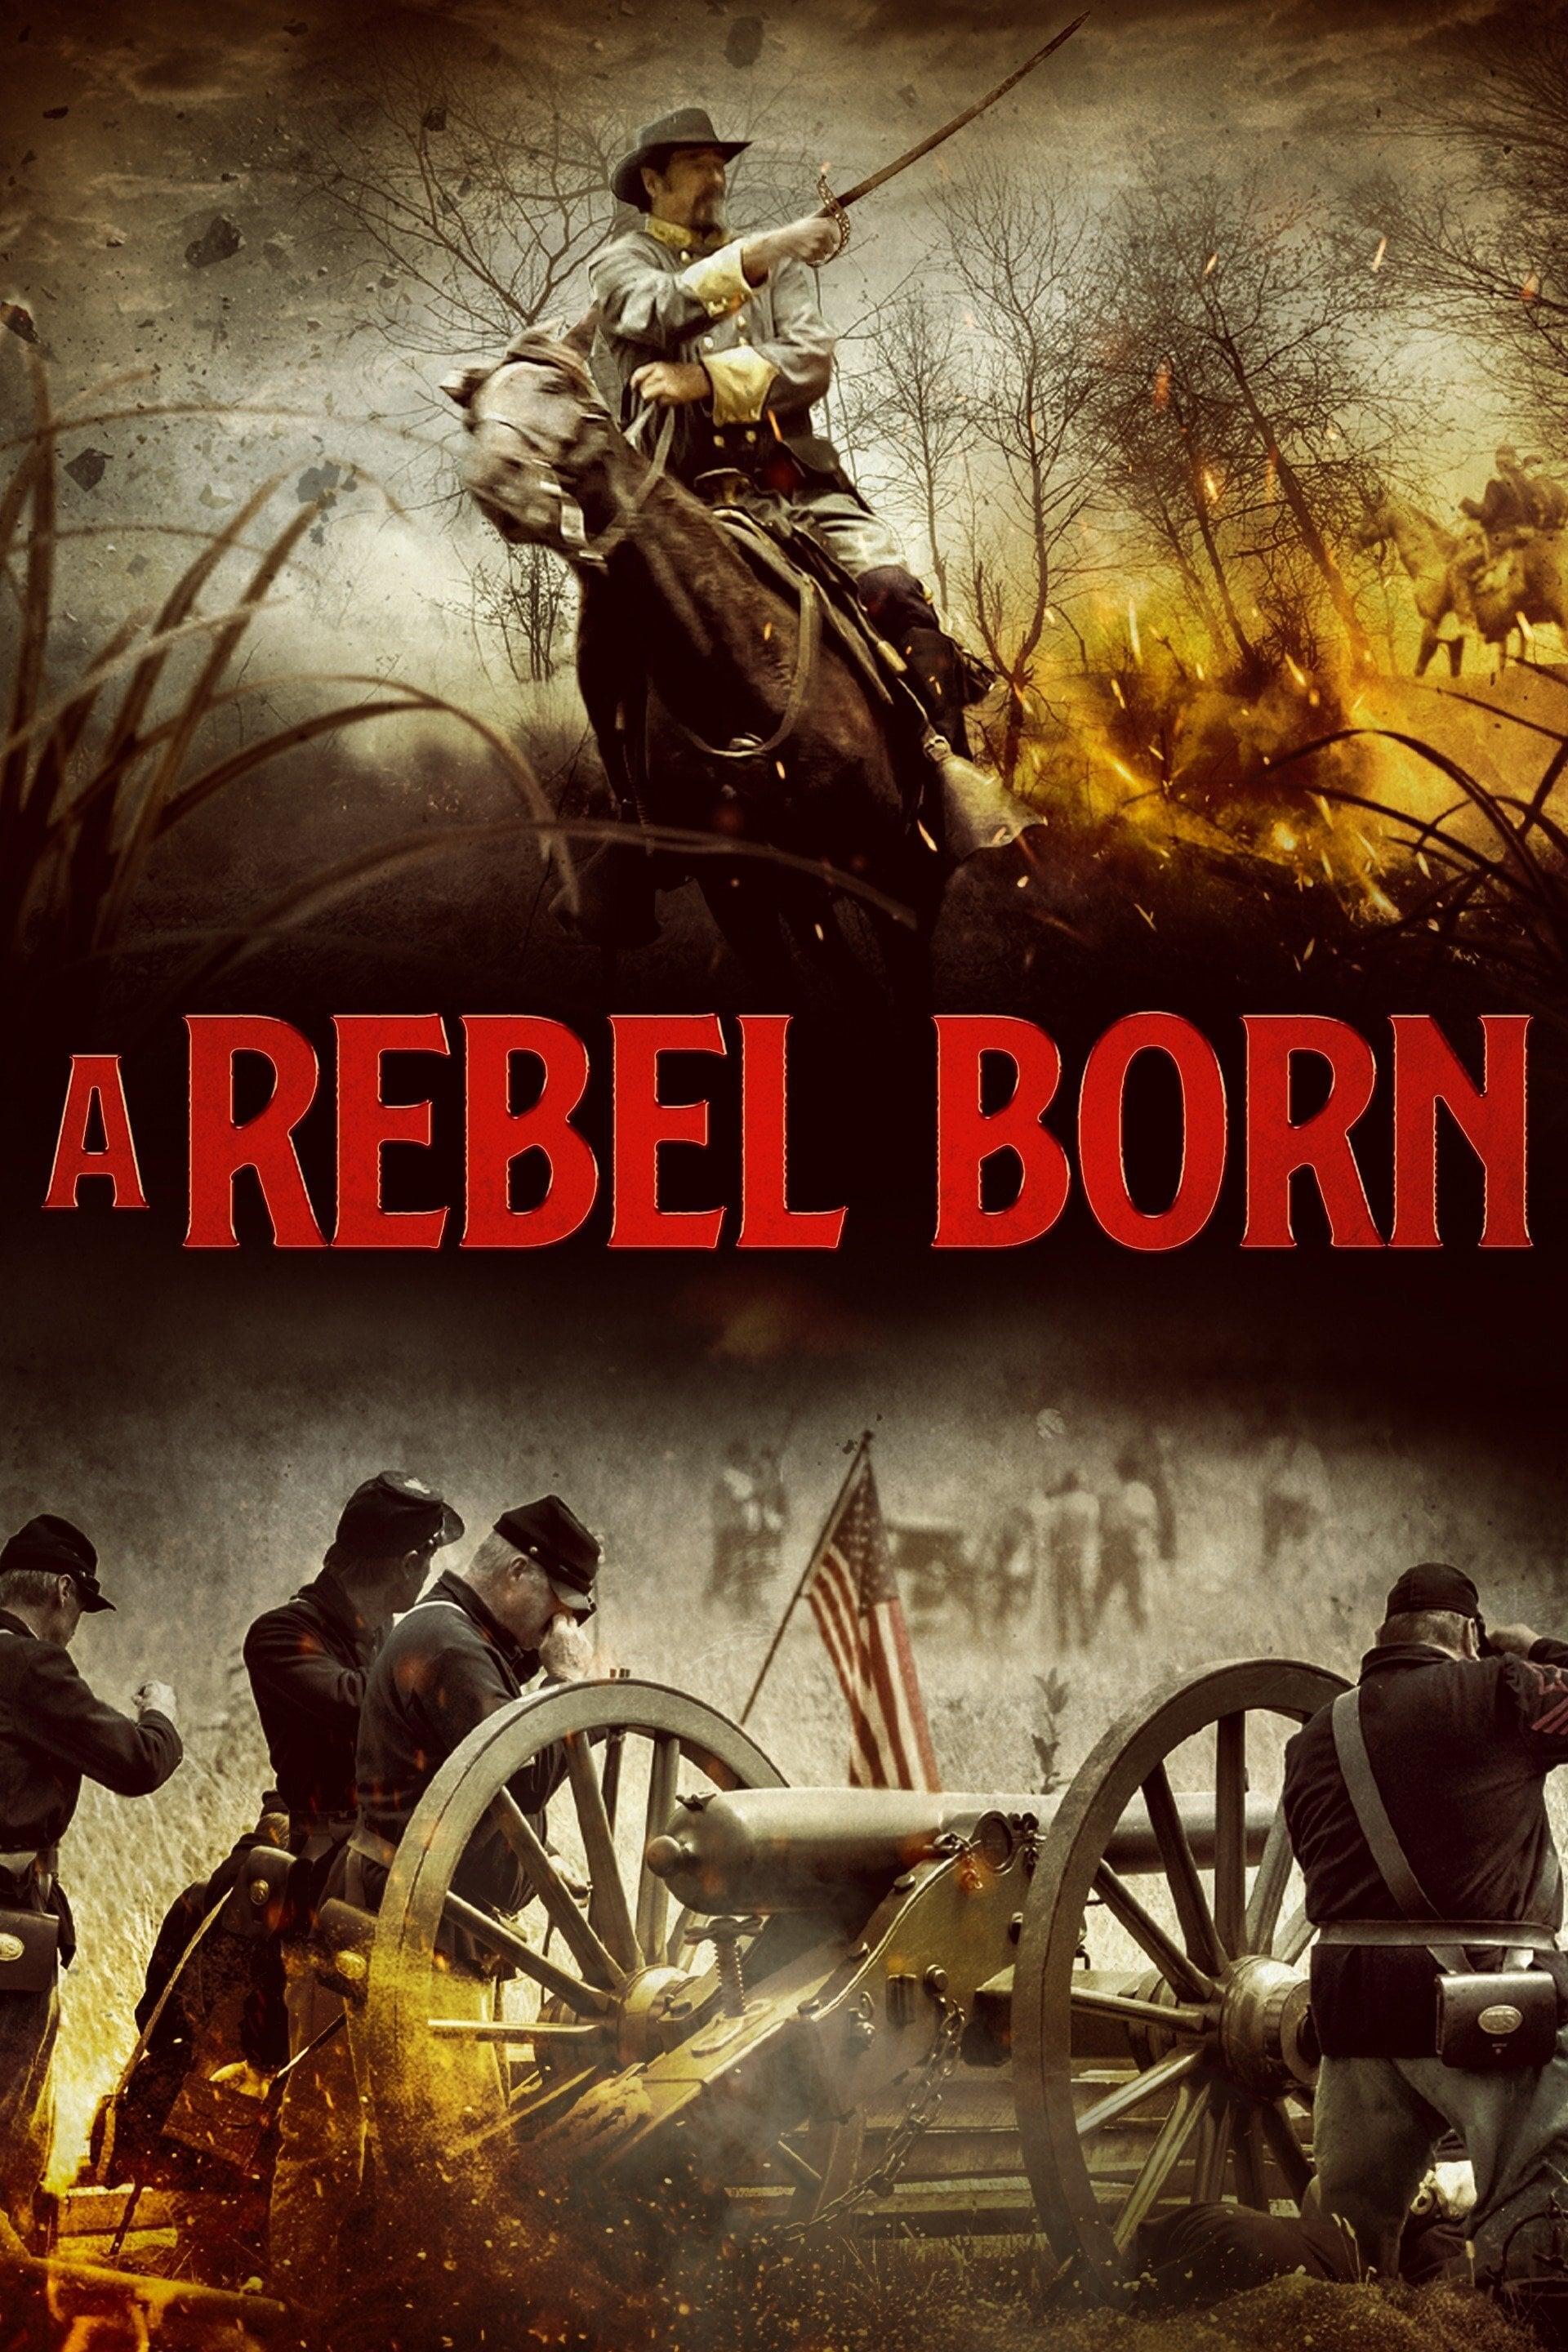 A Rebel Born poster